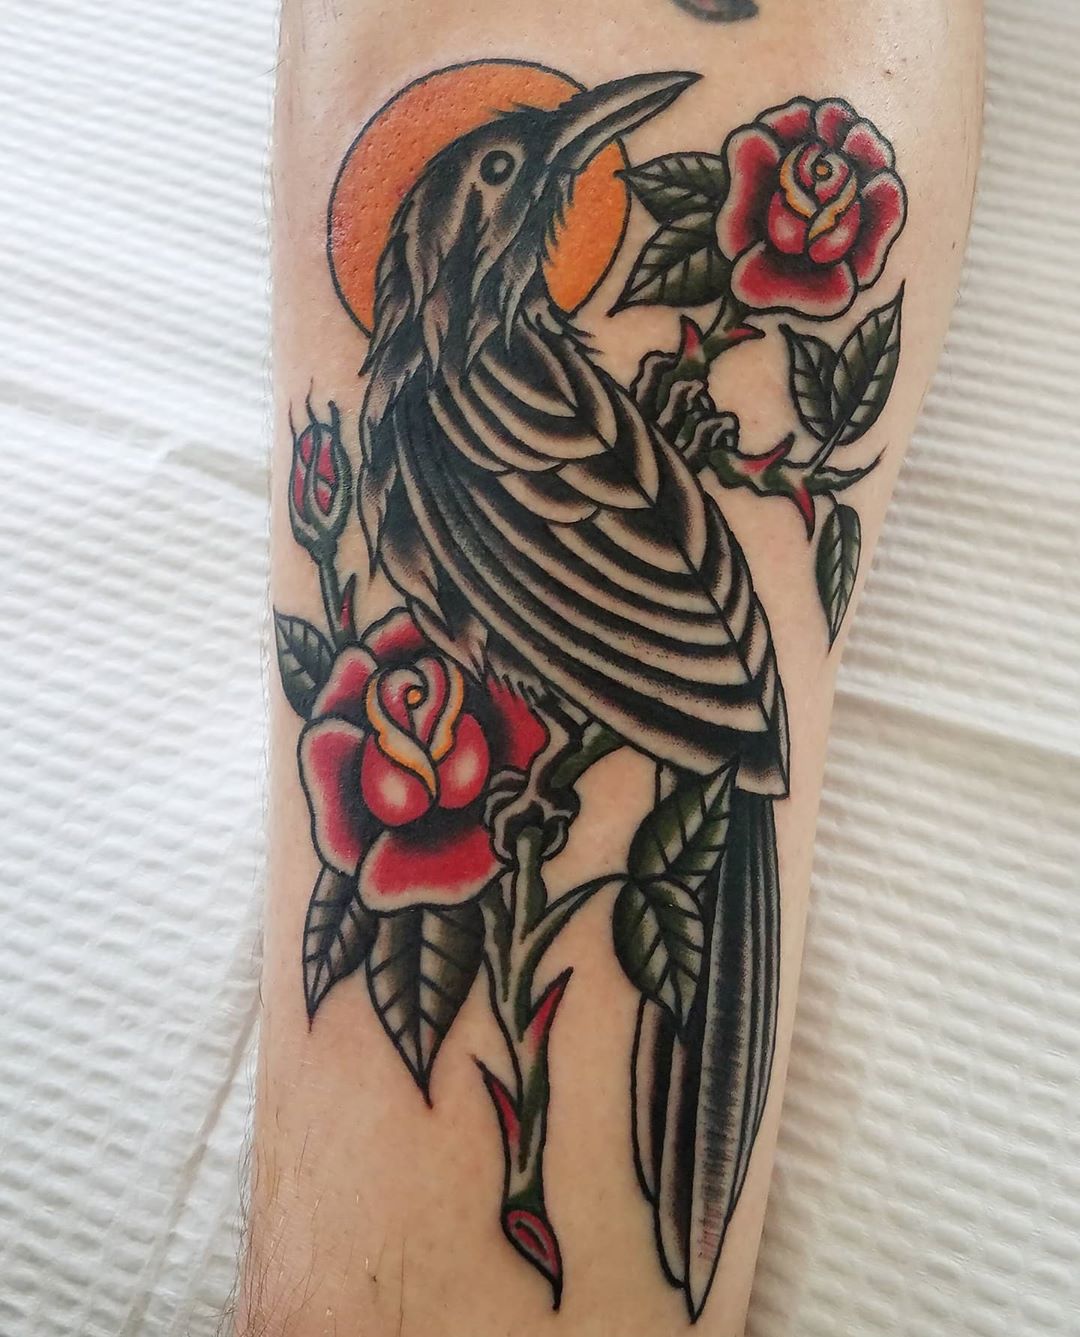 Tiny tattoos #rose #butterfly - Blue Raven Tattoo Studio | Facebook